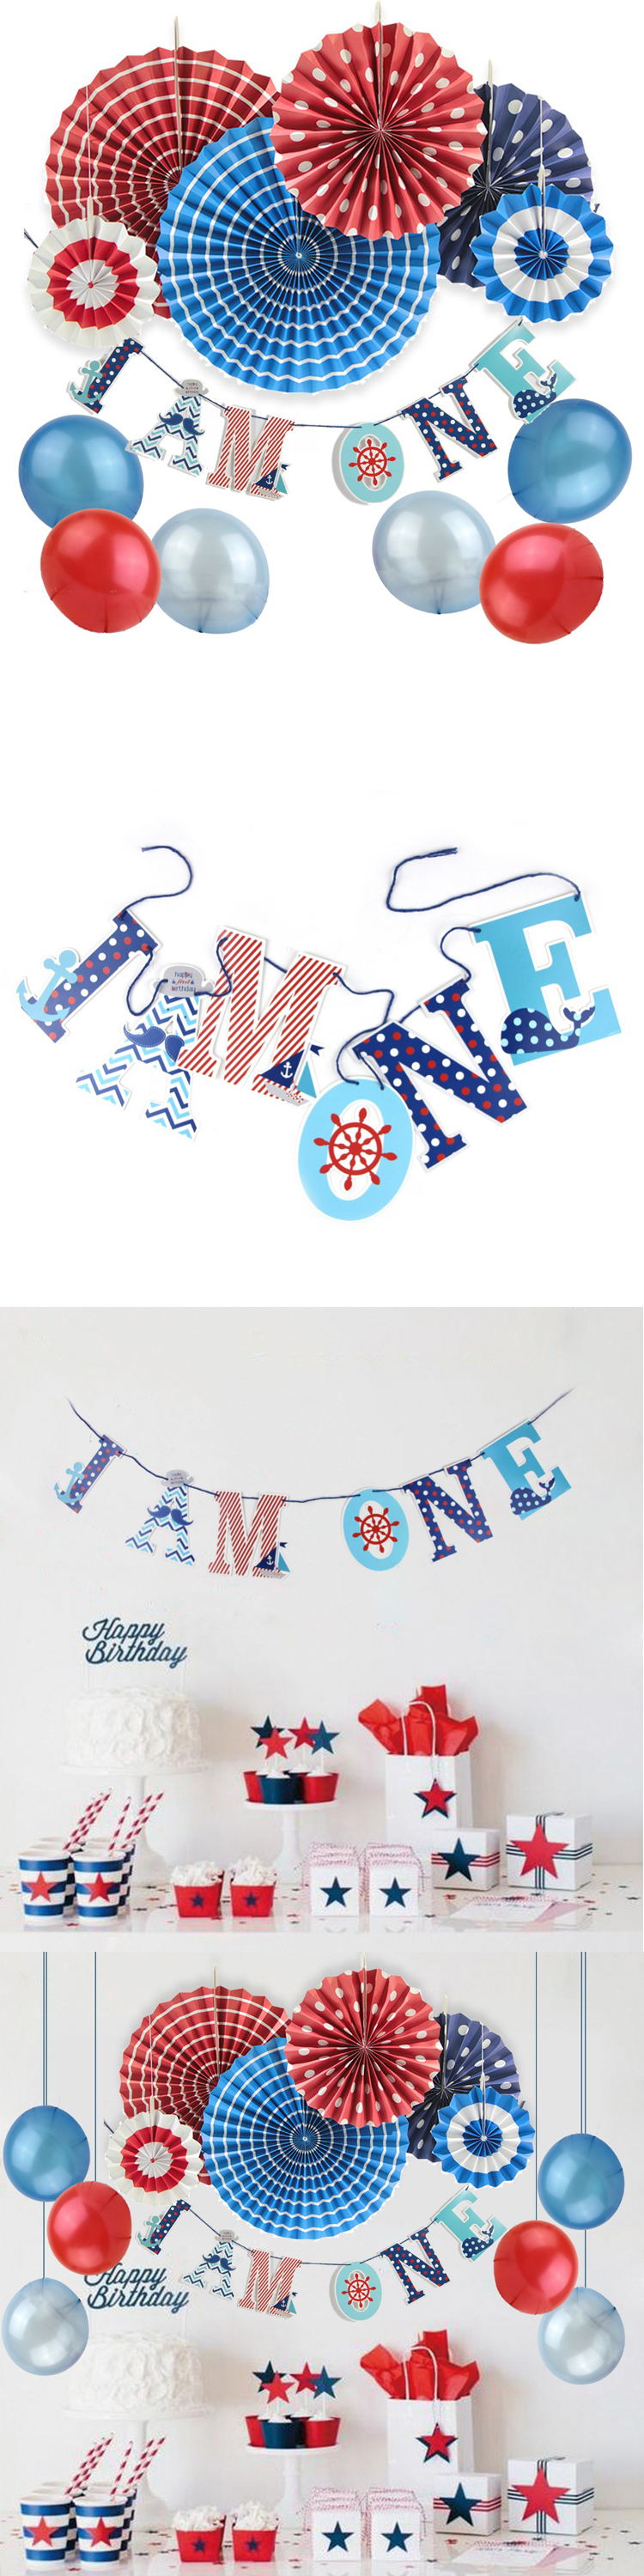 SUNBEAUTY Newly Design 1st Birthday Boy Decorations Kit Kids Party Supplies